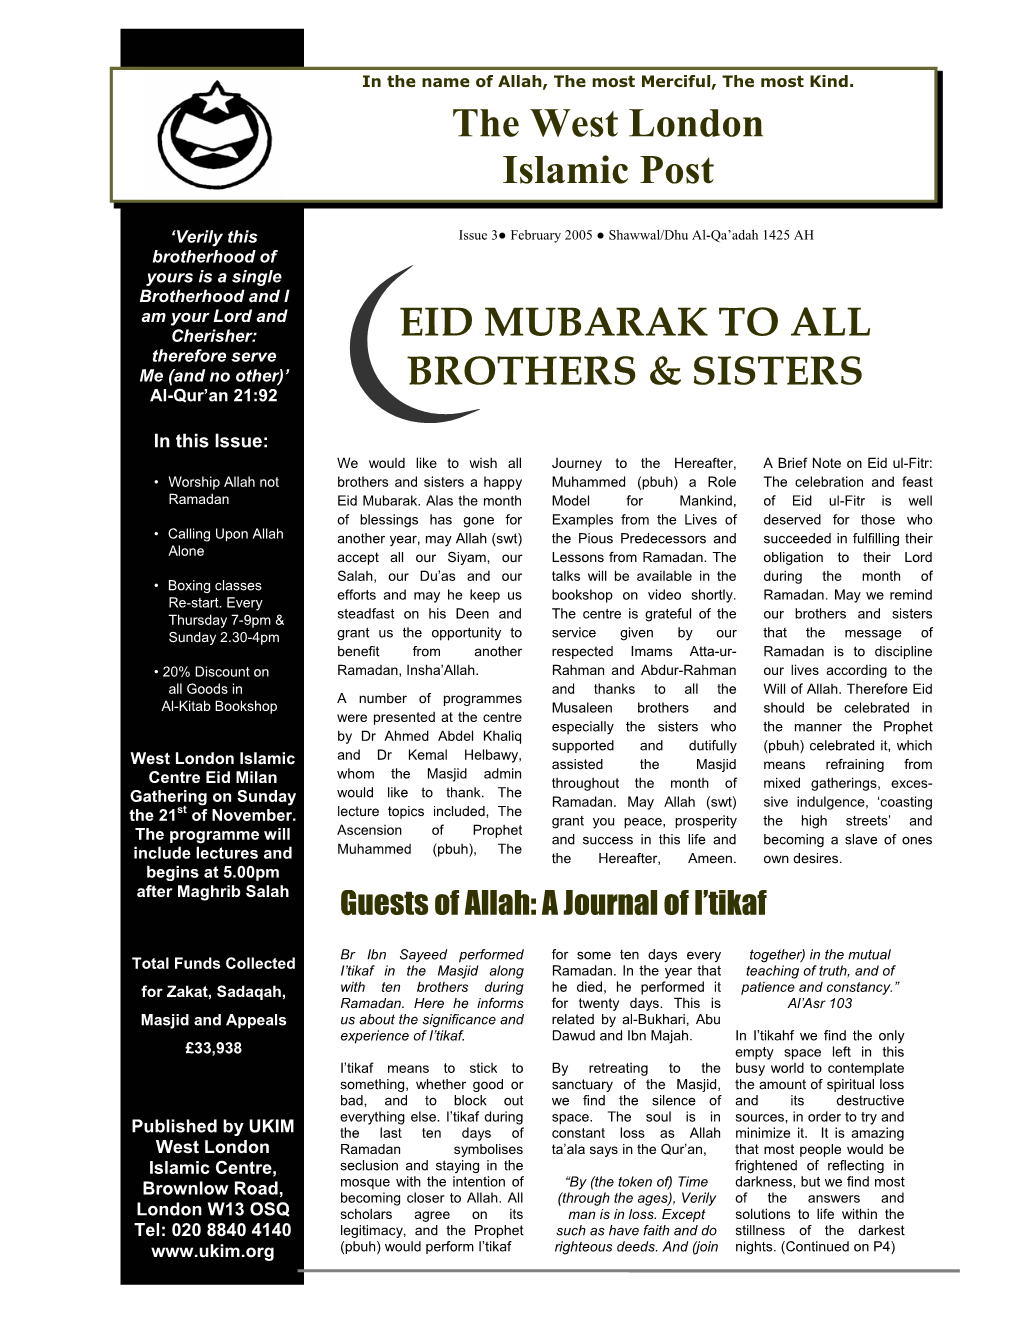 The West London Islamic Post EID MUBARAK to ALL BROTHERS